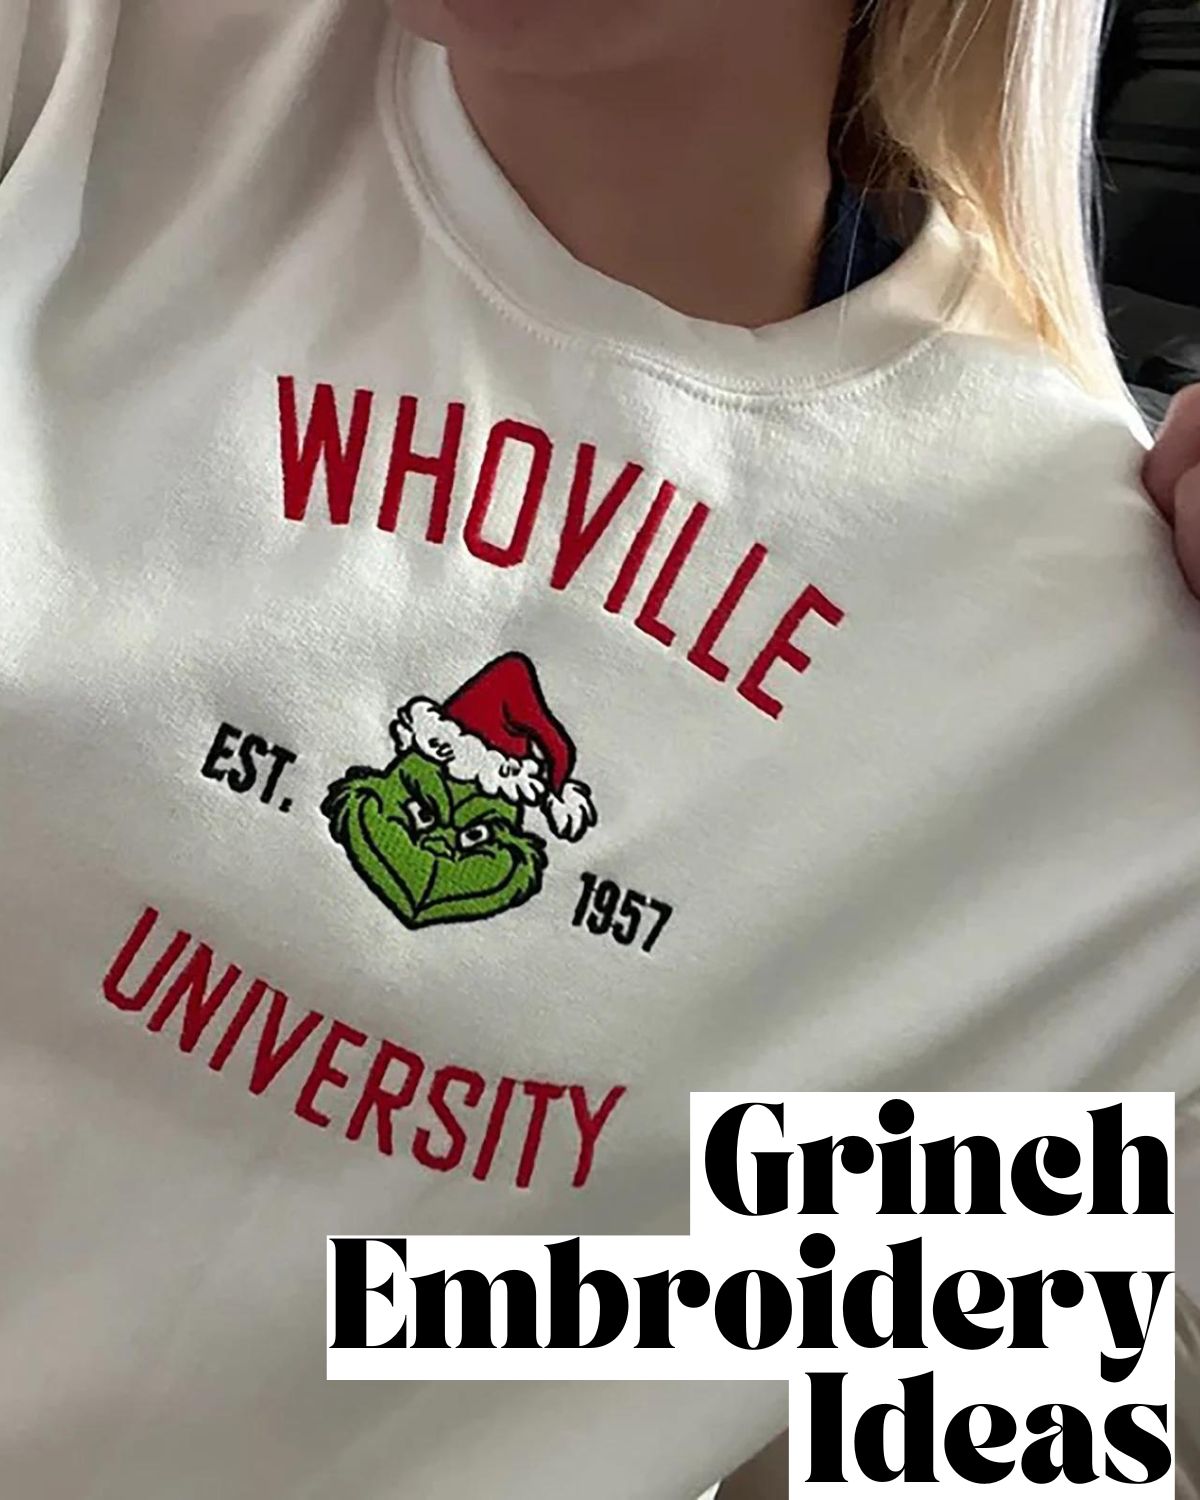 Girl in embroidered sweatshirt